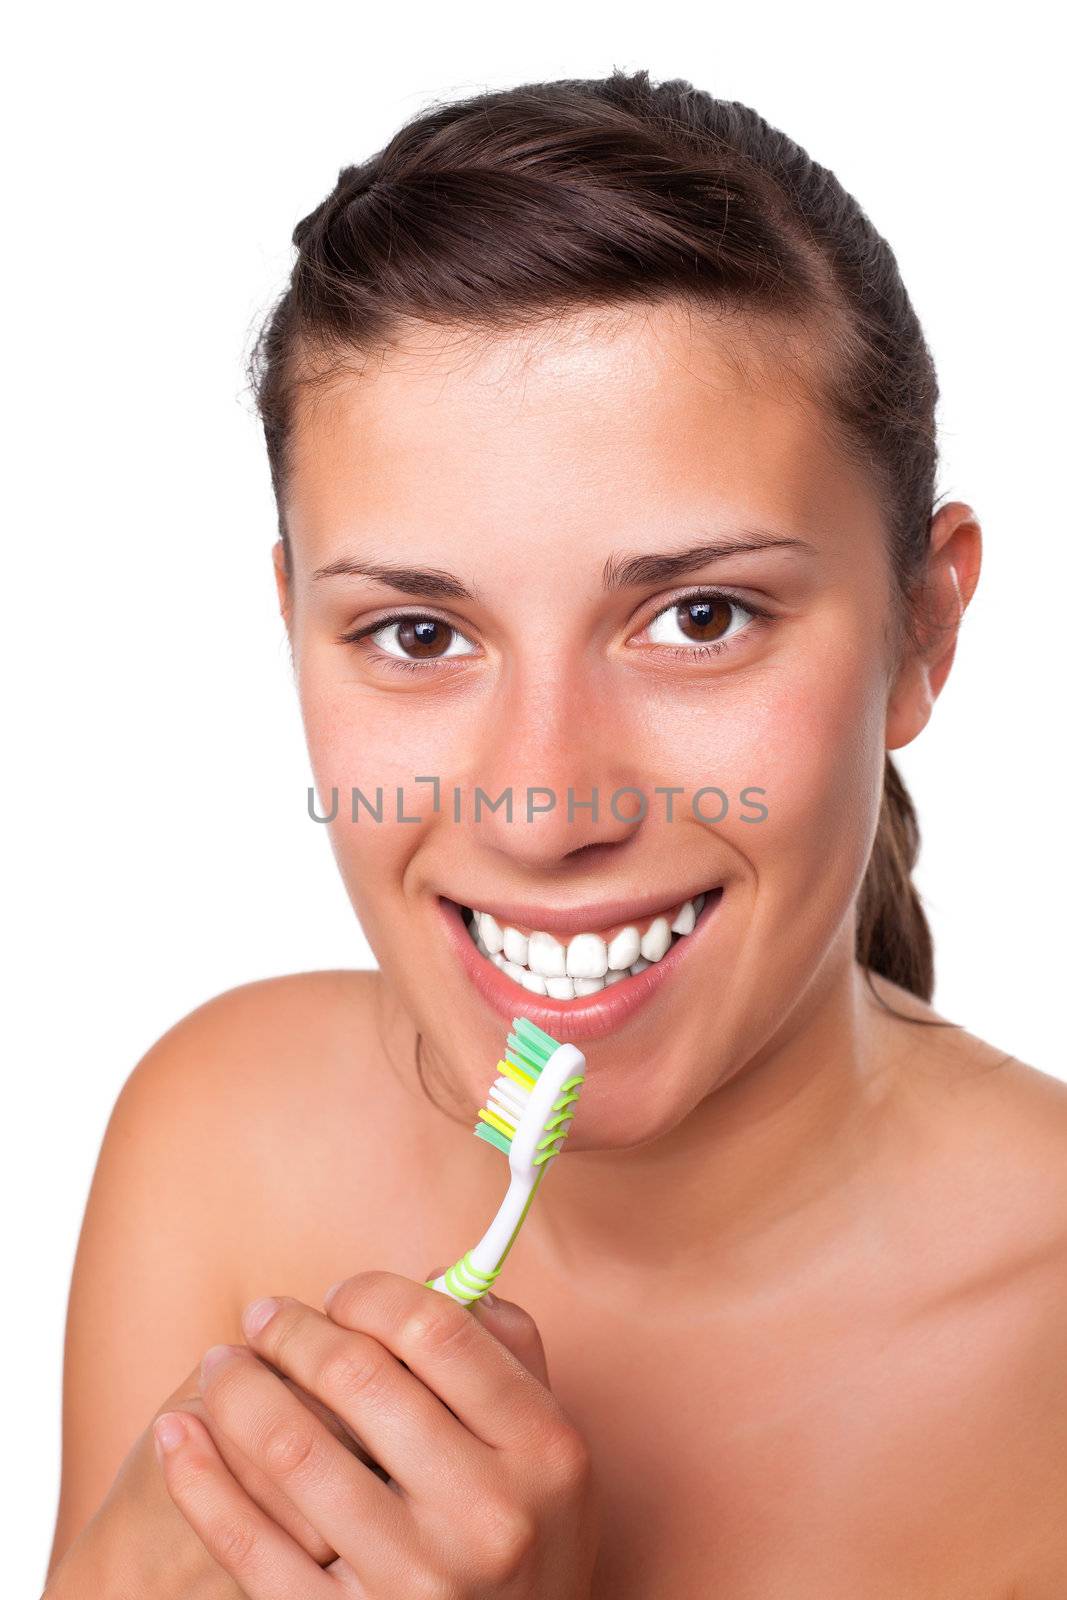 Girl Brushing her Teeth by ra2studio